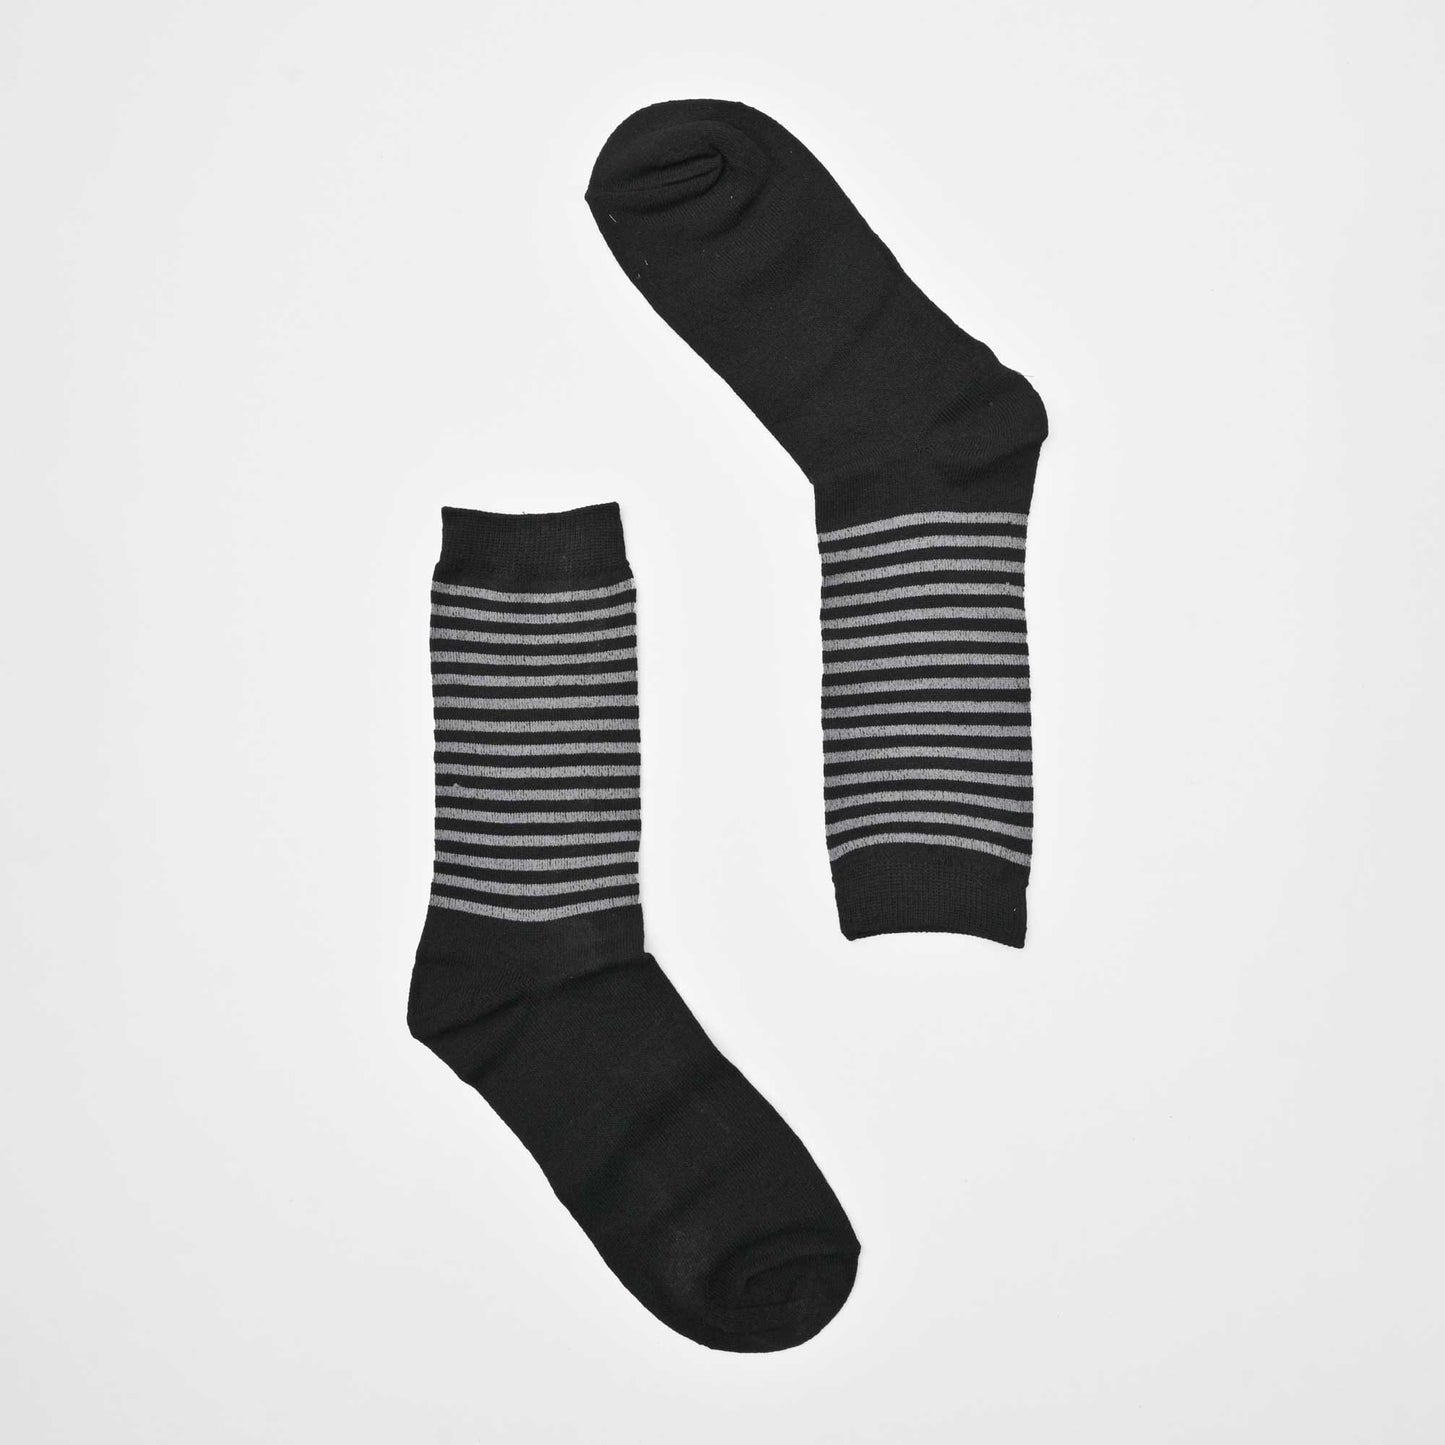 KLV Men's Algadon Classic Crew Socks Socks RAM Black D3 EUR 40-46